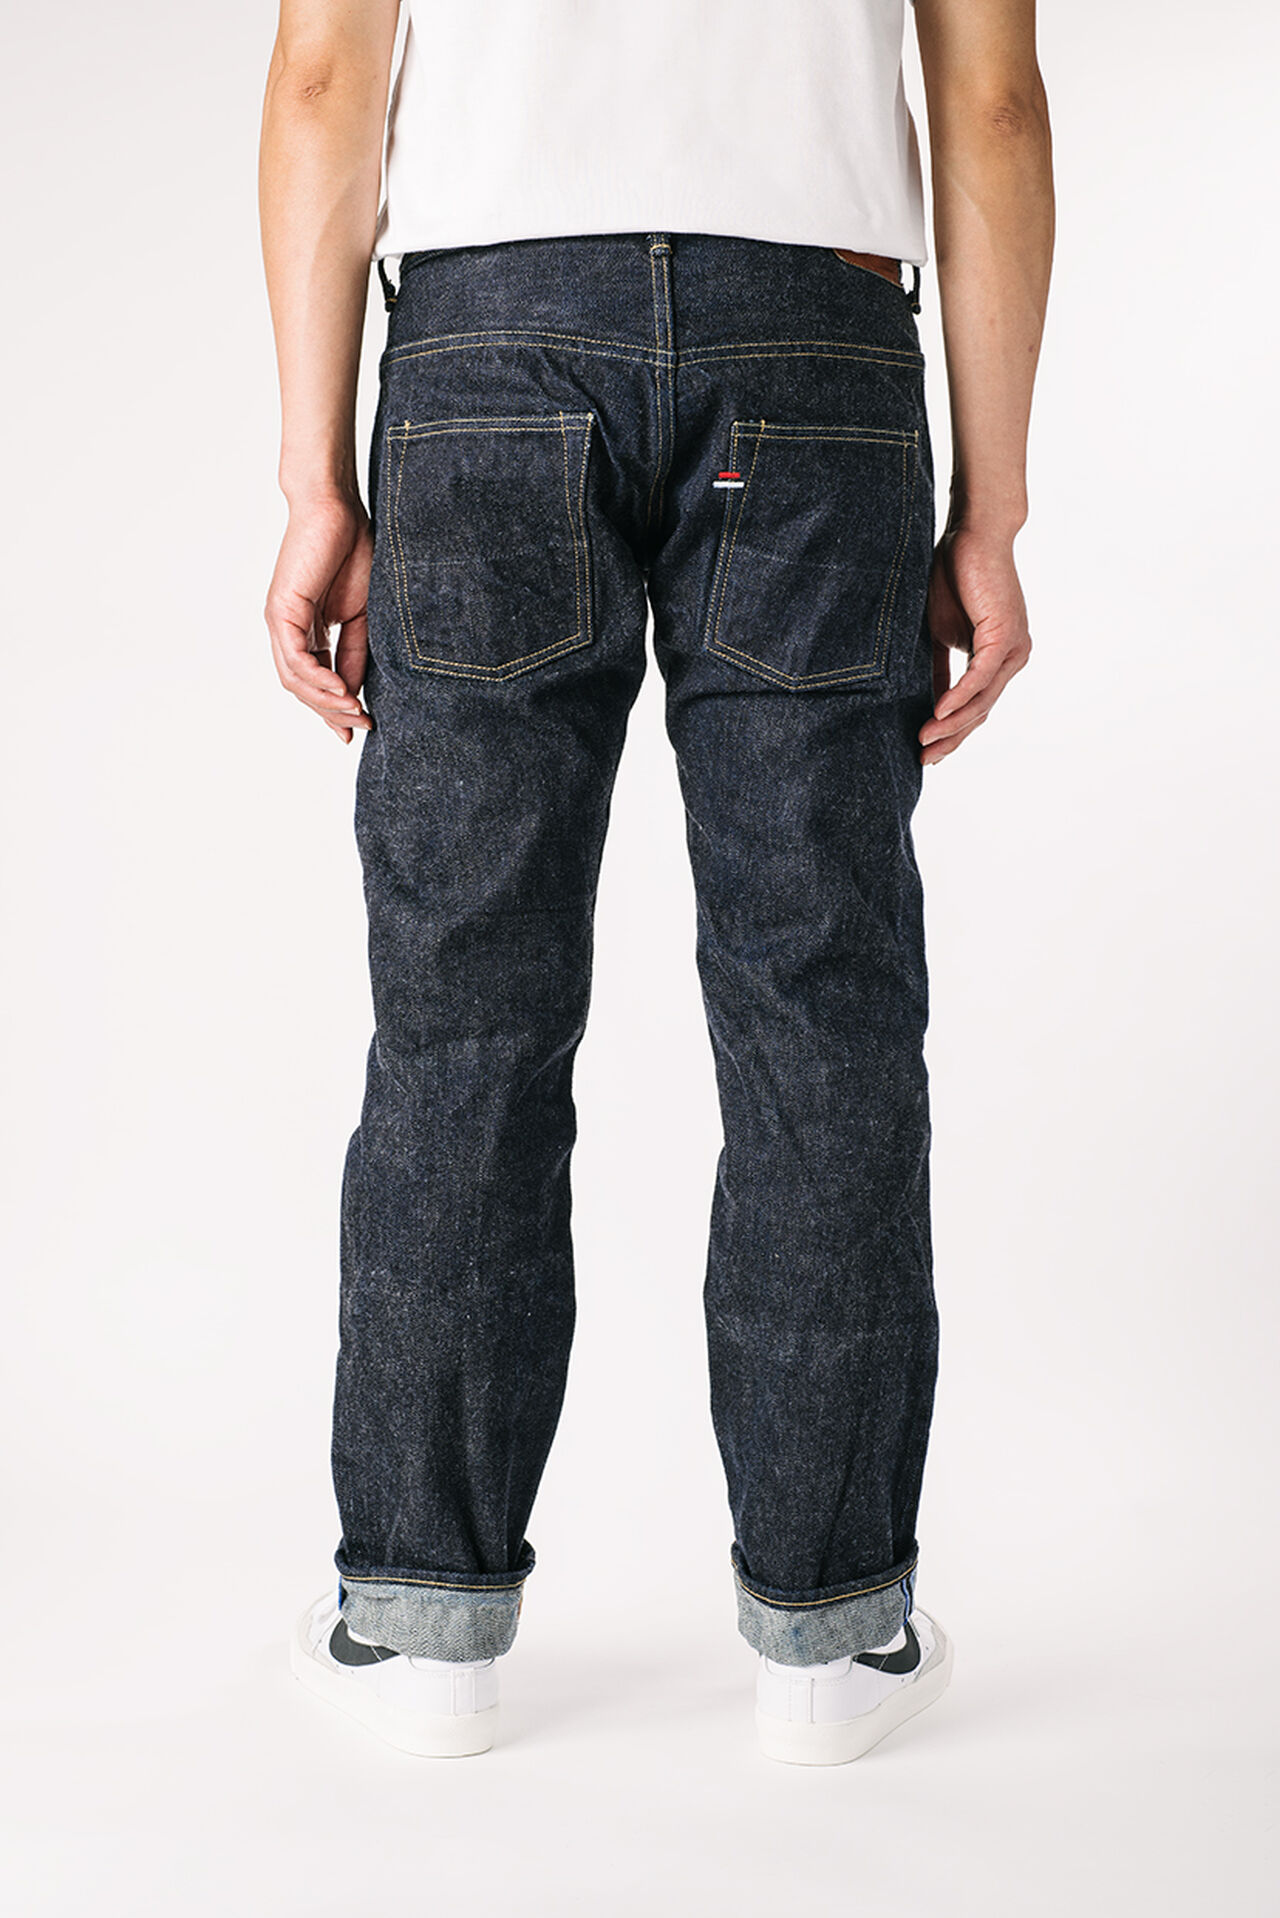 RCSST 16.5oz Redcast Slim Straight Jeans,, large image number 3